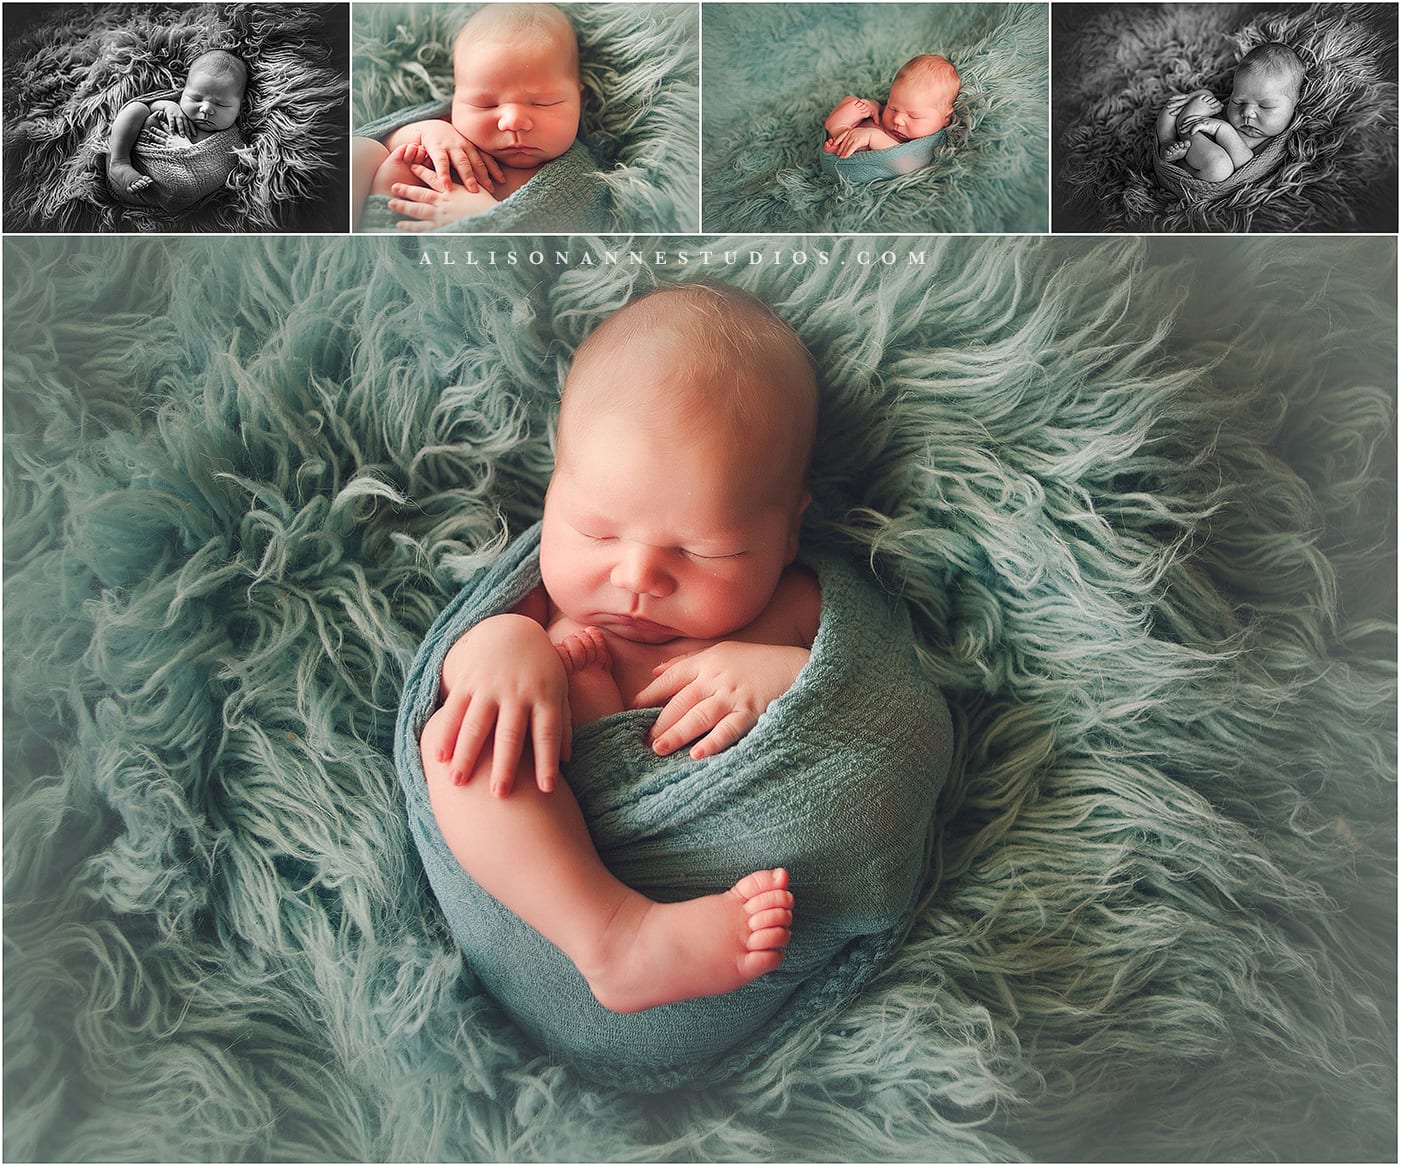 Warner, AllisonAnne Studios, Hammonton, Newborn Photographer, South Jersey, Best newborn photographer, Allison Gallagher, baby yawn, sleepy baby, family, love